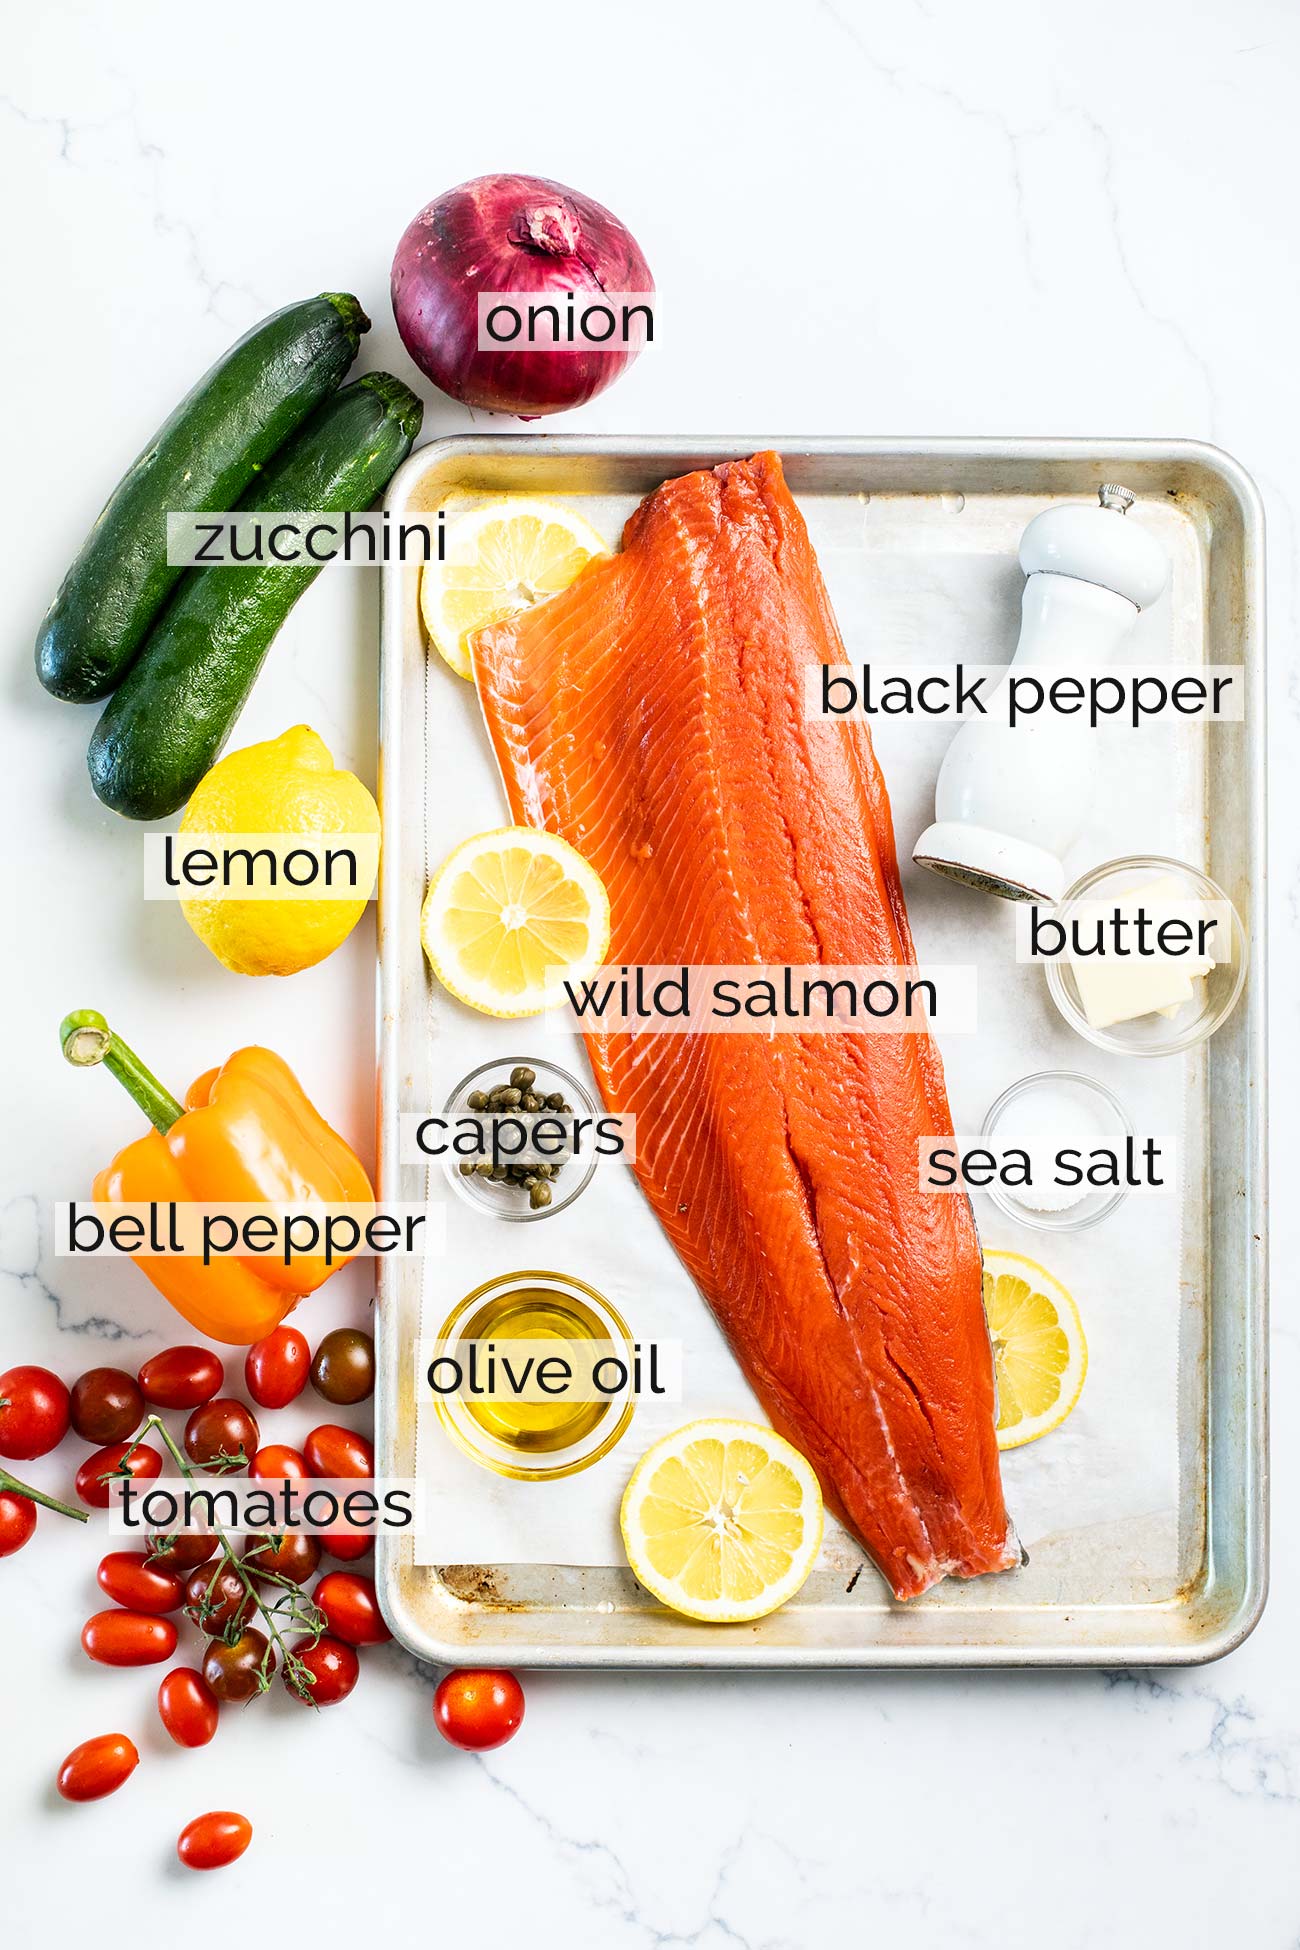 The ingredients needed to make baked mediterranean salmon.